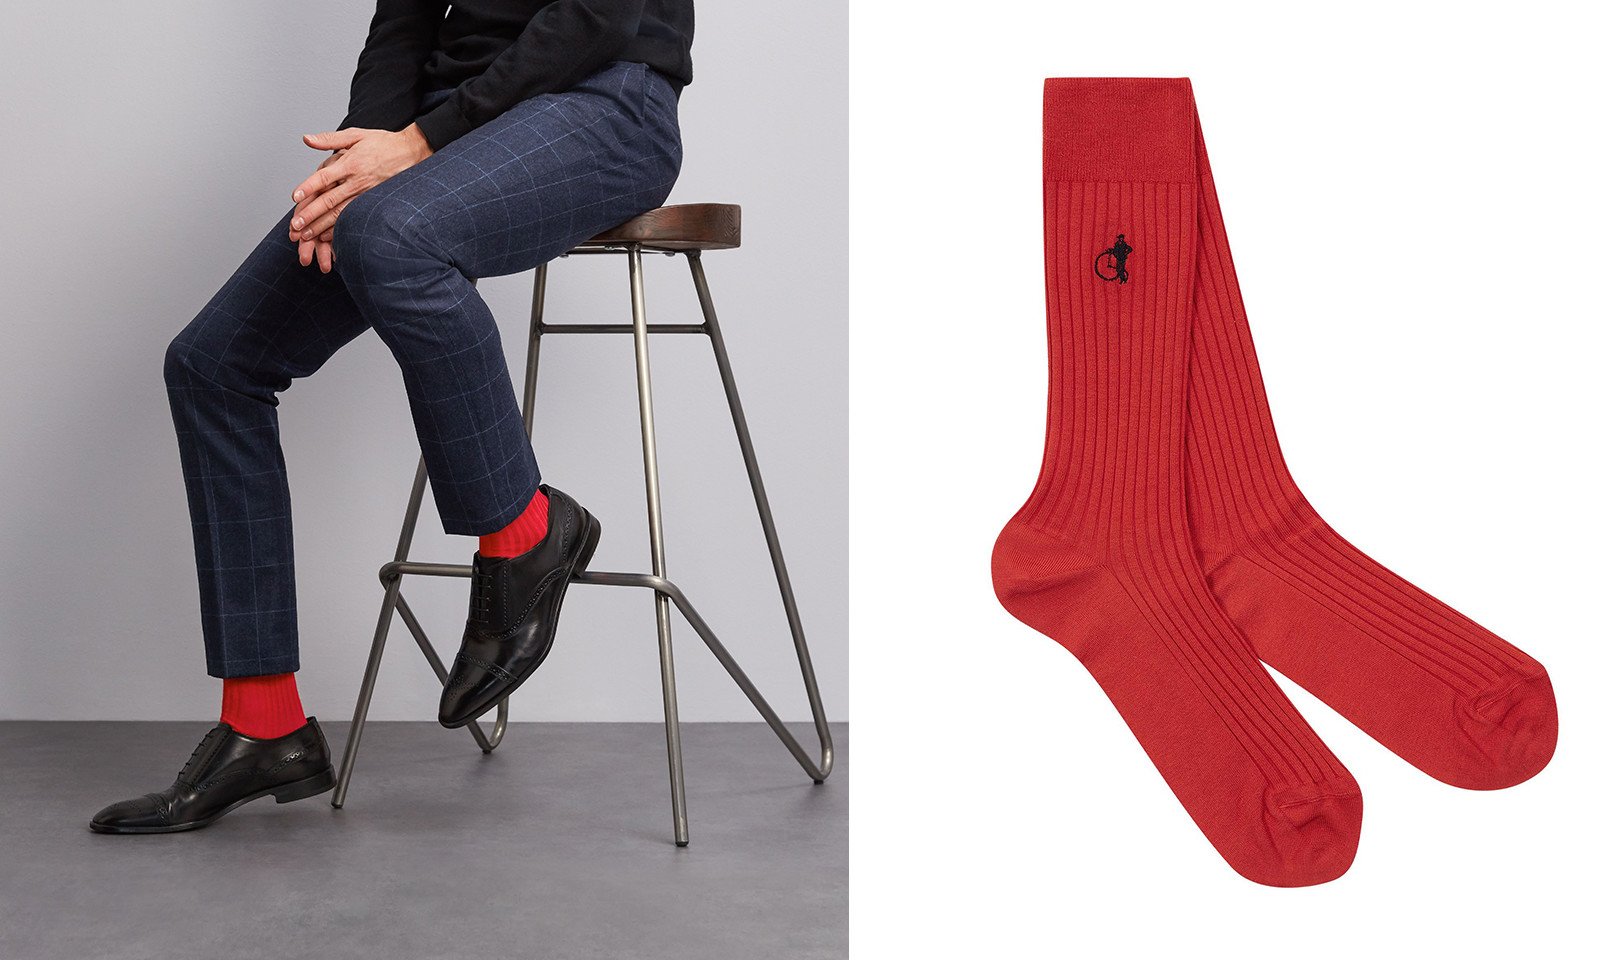 Gentleman sitting down wearing a red sock